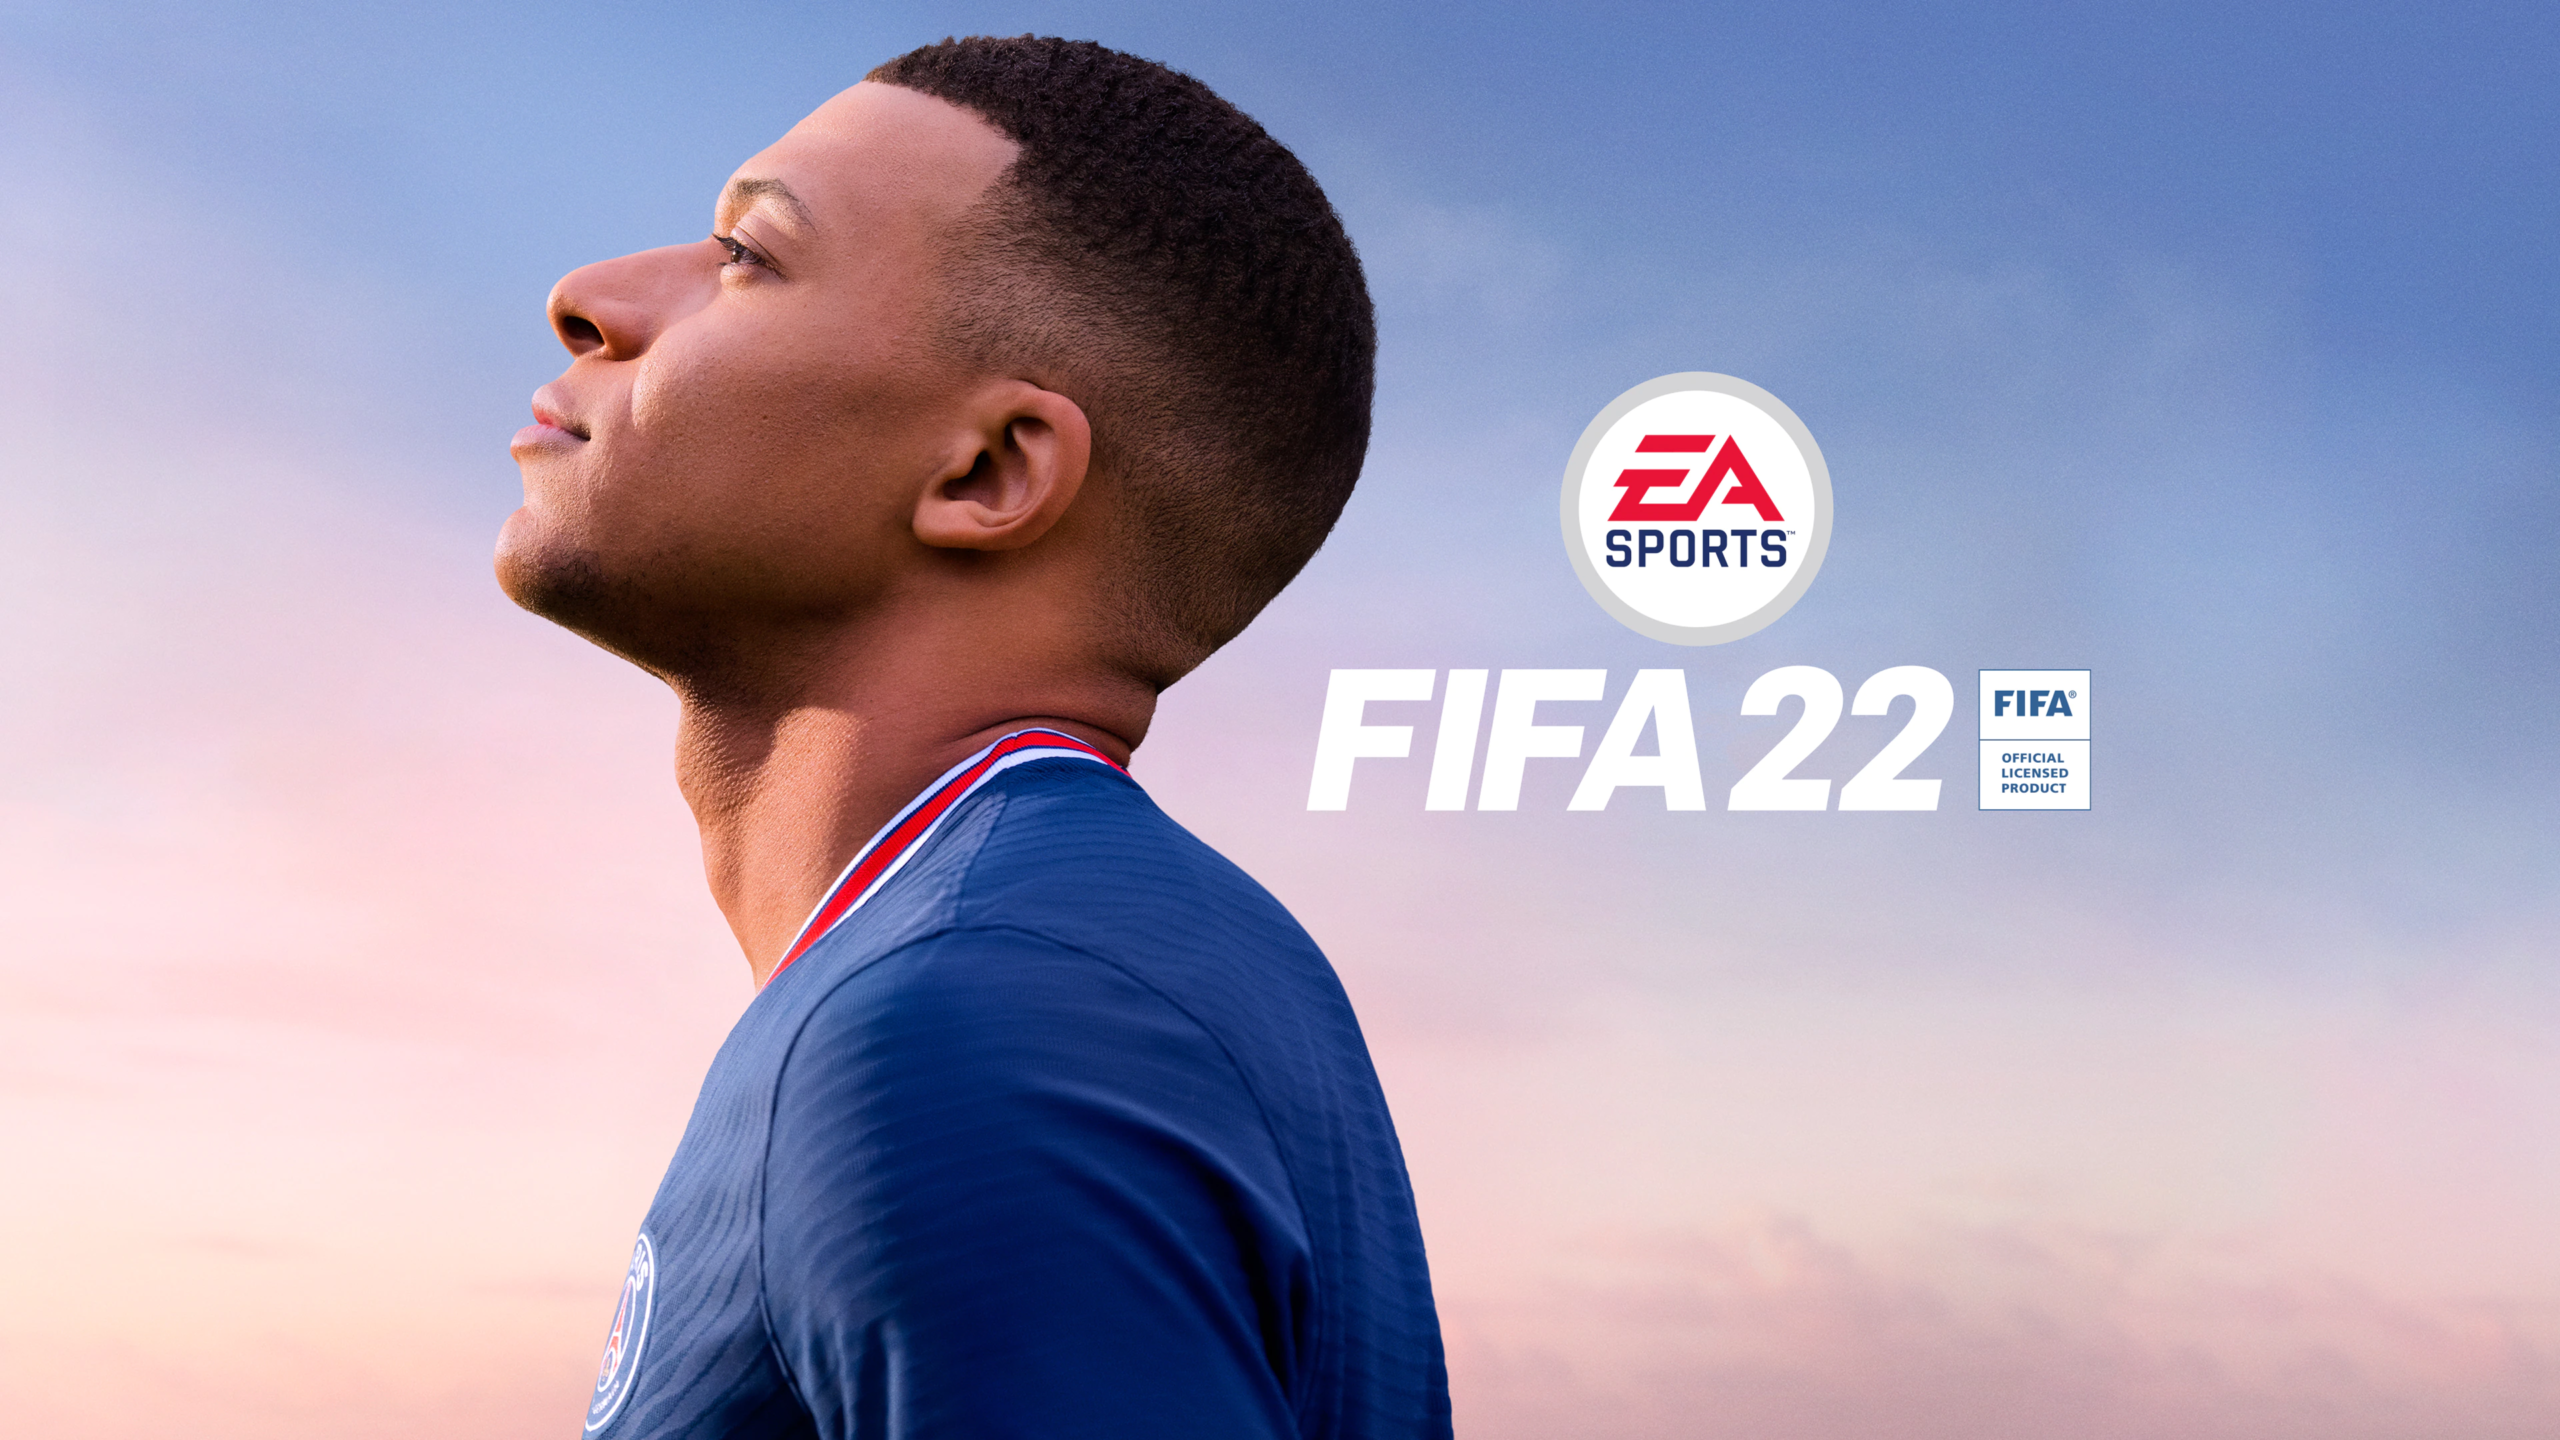 Banco de dados de Notas do FIFA 22 - Melhores jogadores - EA SPORTS